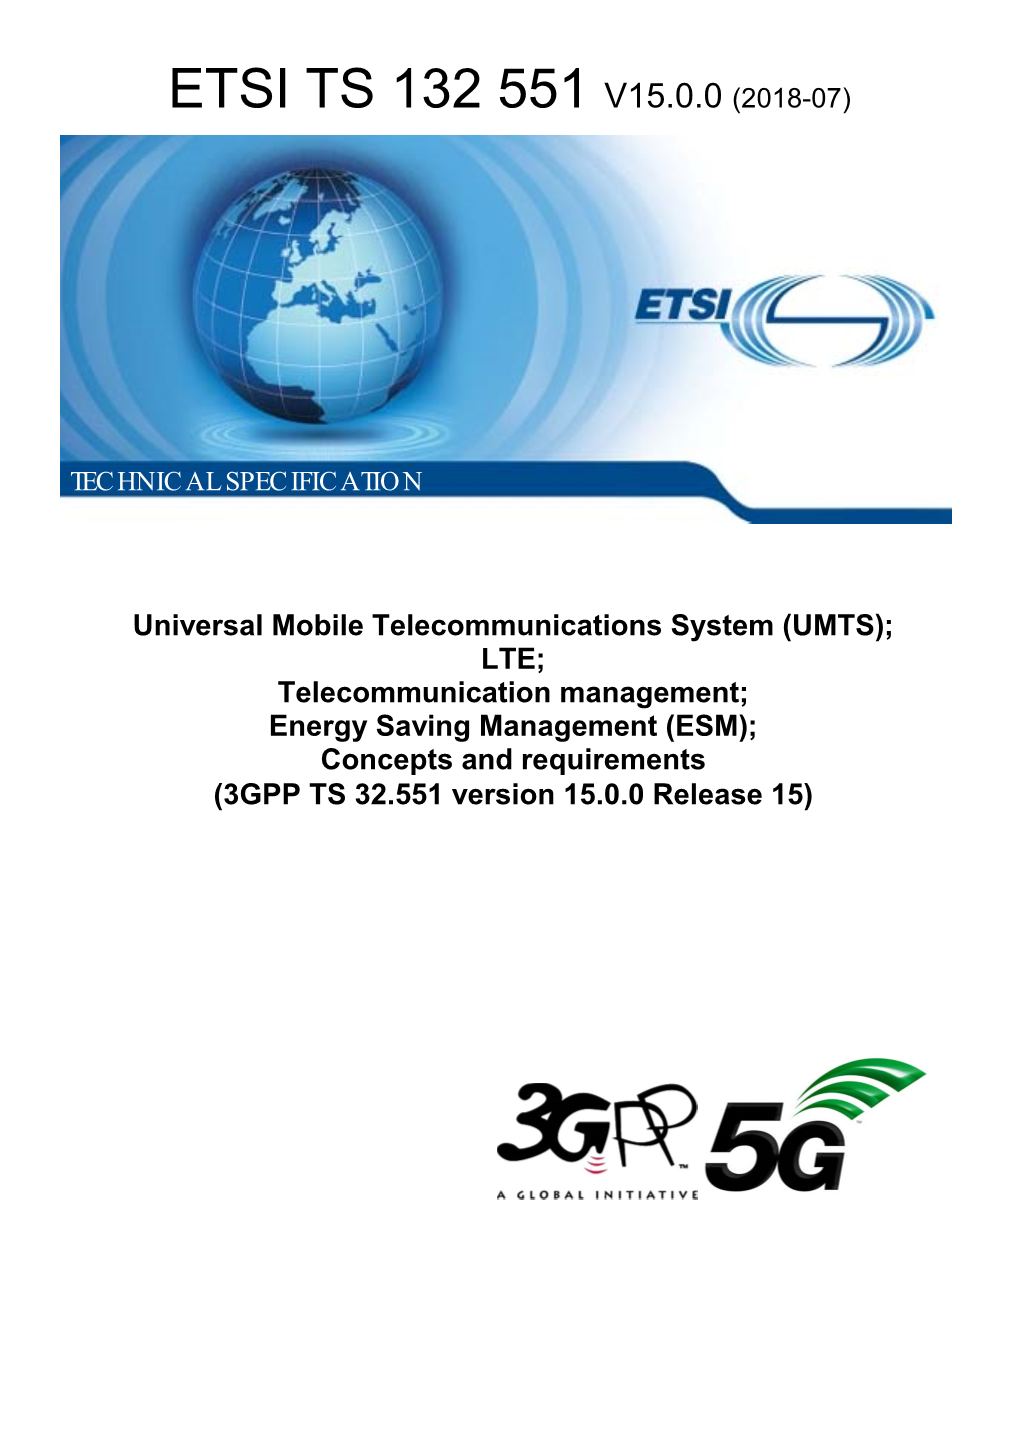 UMTS); LTE; Telecommunication Management; Energy Saving Management (ESM); Concepts and Requirements (3GPP TS 32.551 Version 15.0.0 Release 15